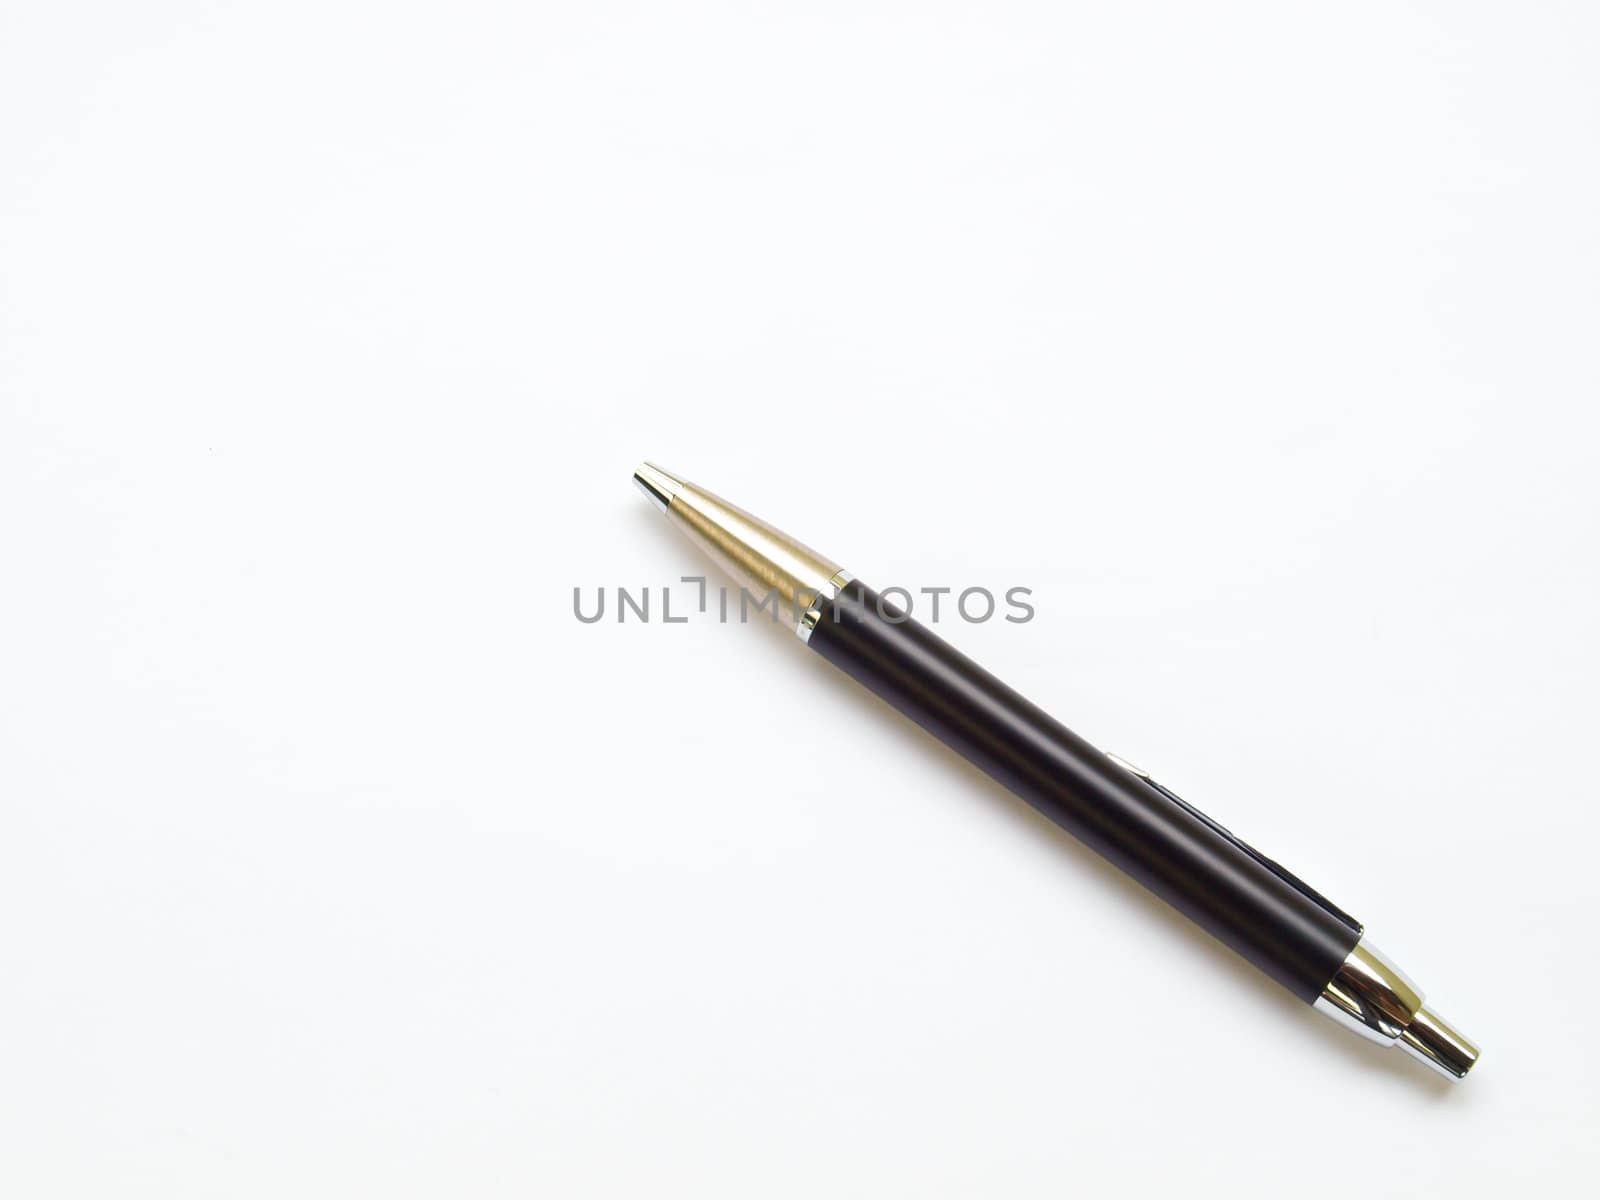 Black ball pen isolated on white background